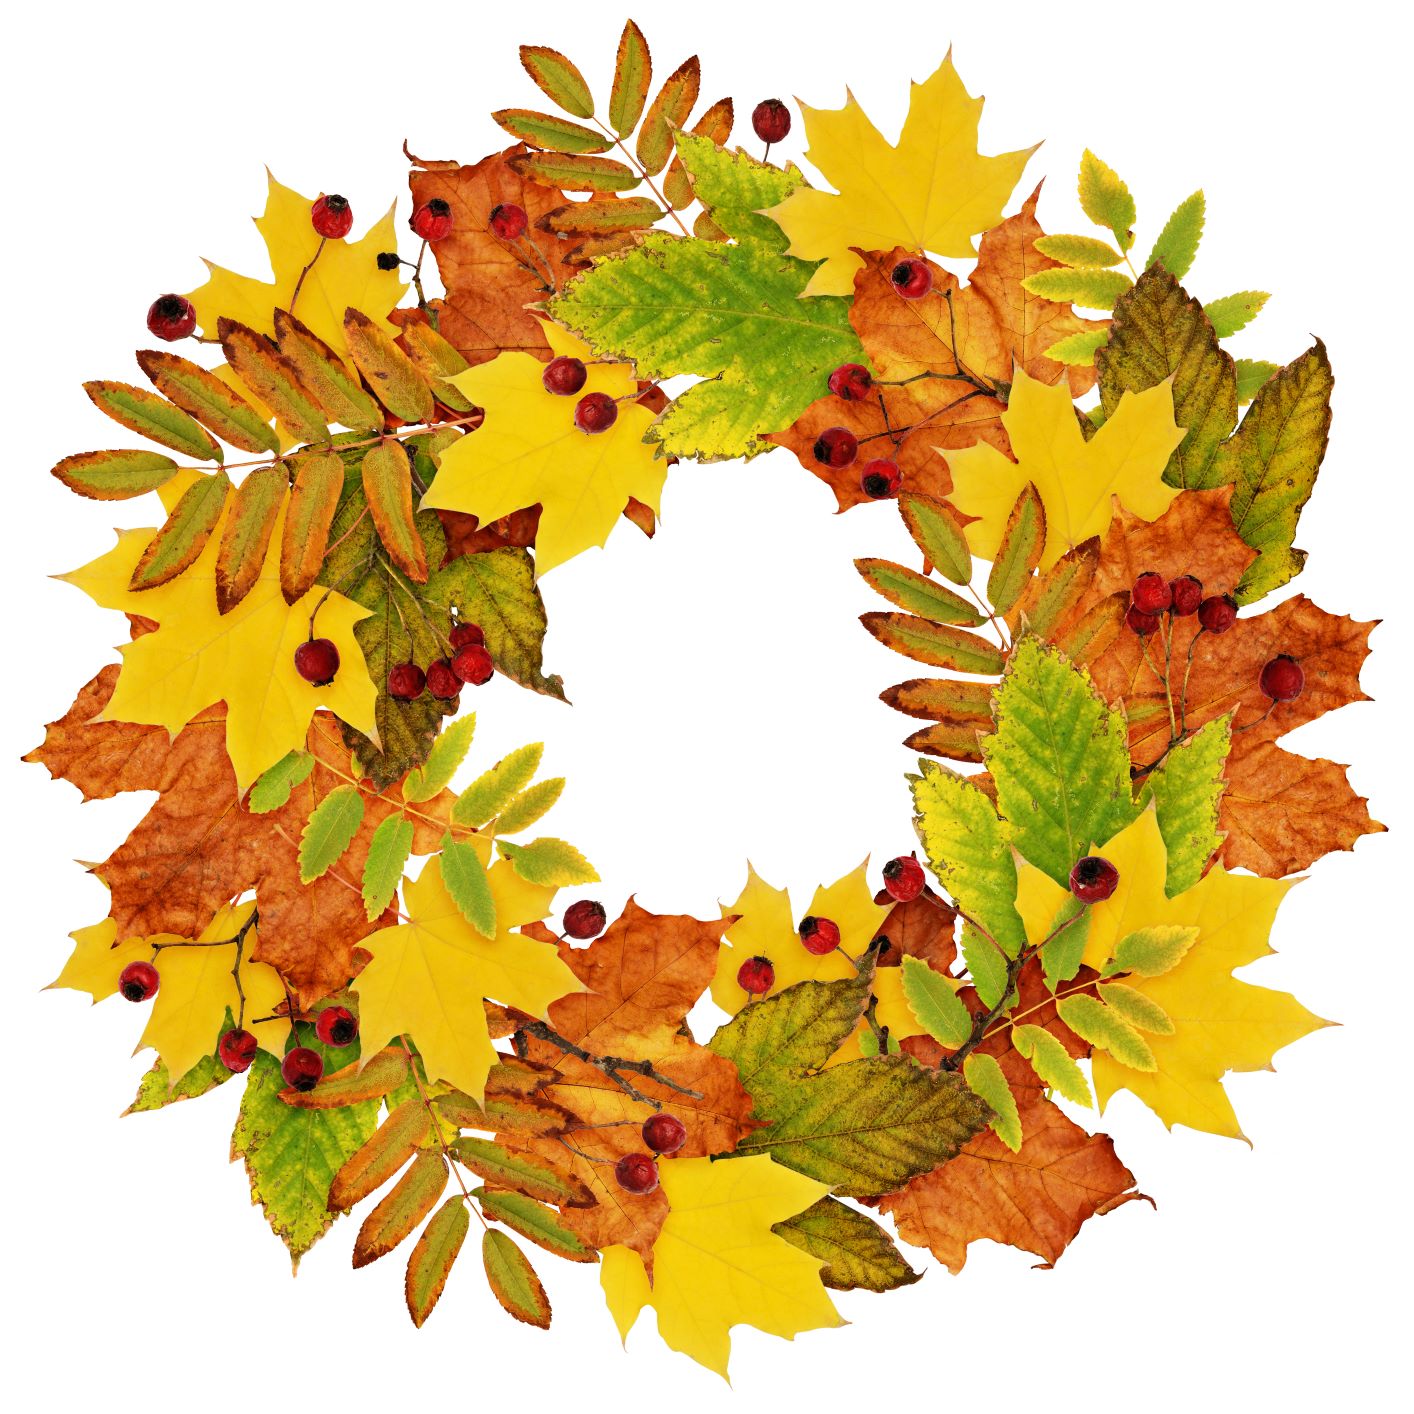 An autumnal wreath